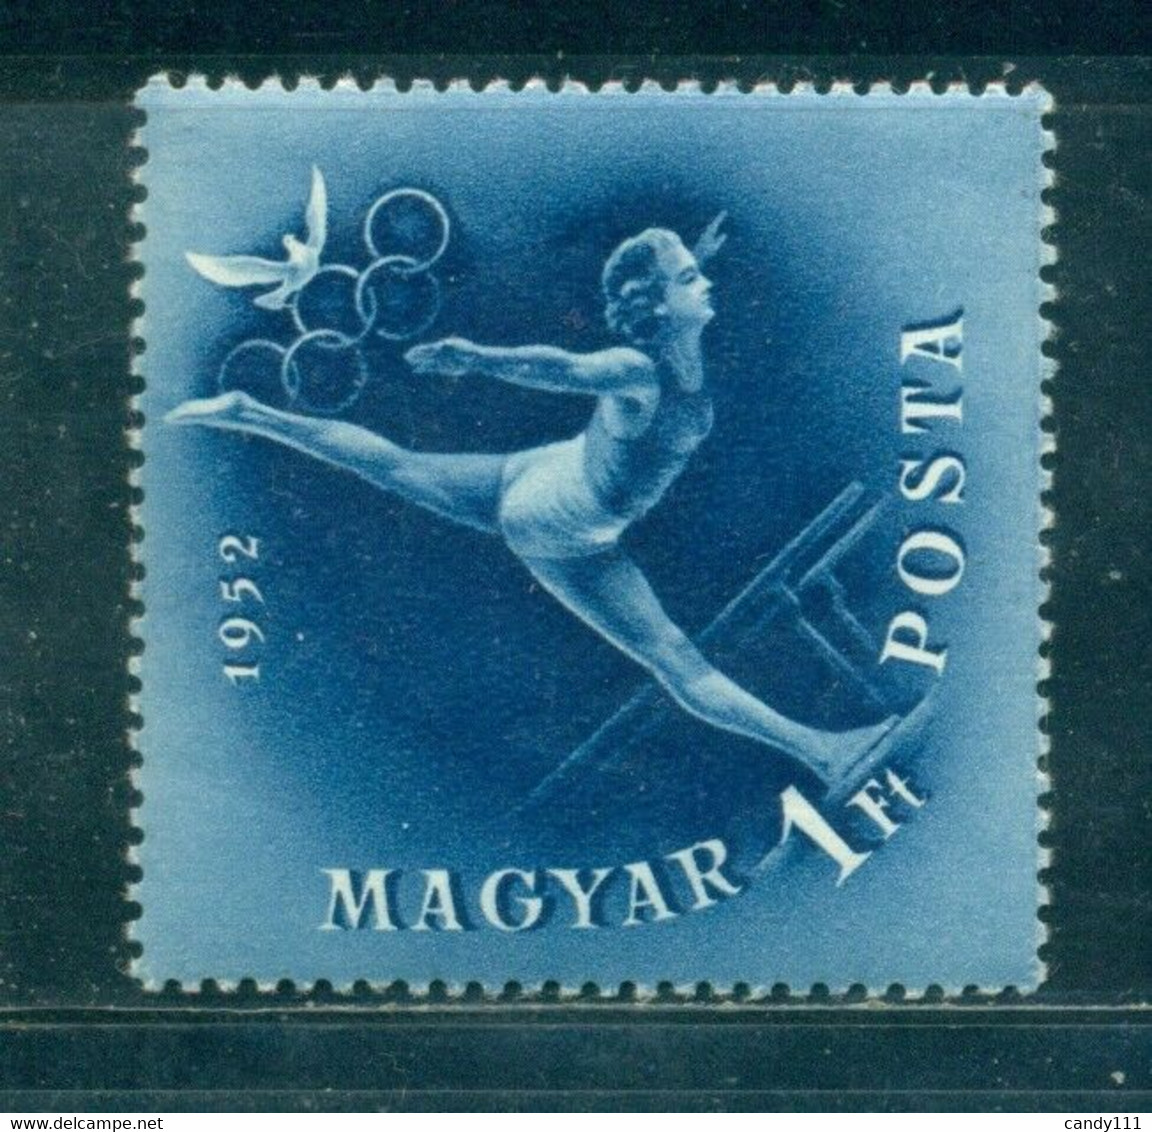 1952 Gymnastics, Turnen, Pigeon, Helsinky Olympics, Hungary, Mi. 1250, MNH - Sommer 1952: Helsinki